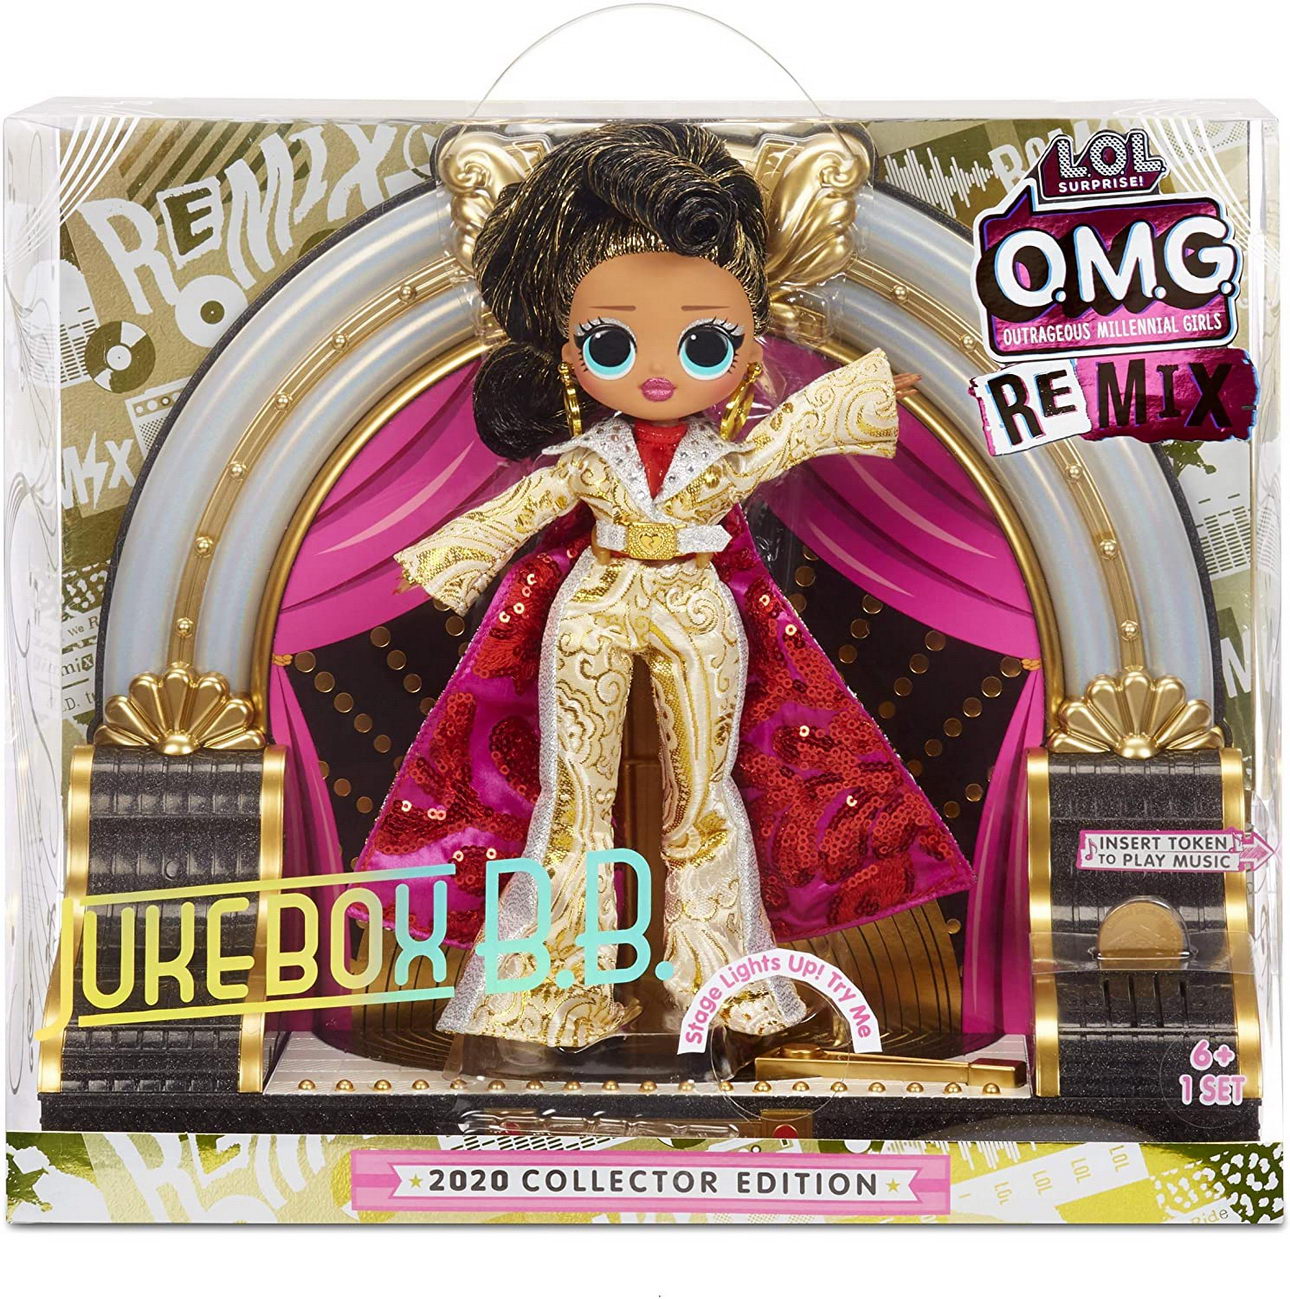 Jukebox B.B. - LOL OMG Remix - Collector Edition 2020 (569879E7C)